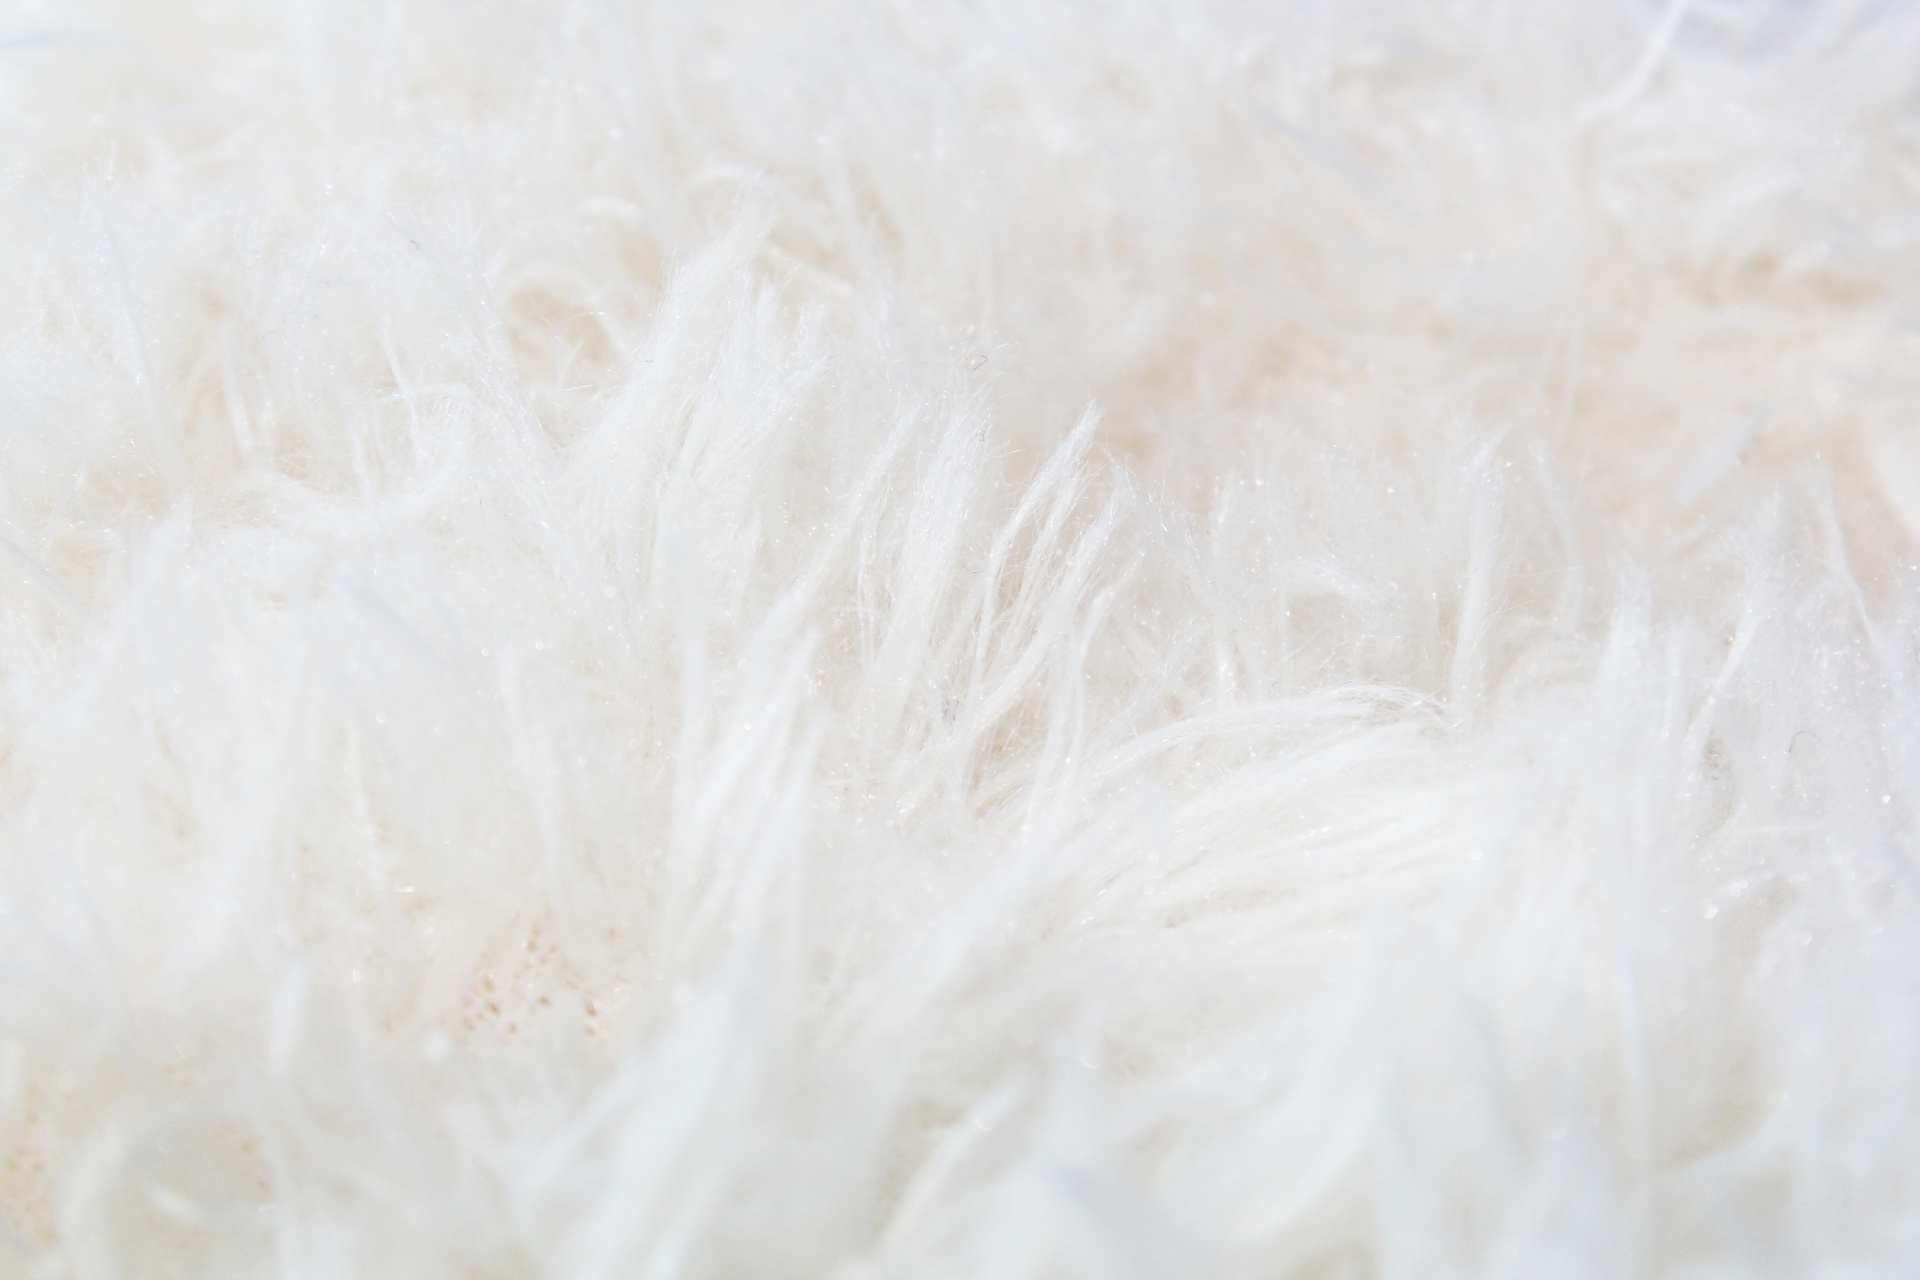 White Fur Background Free Stock Photo - Public Domain Pictures